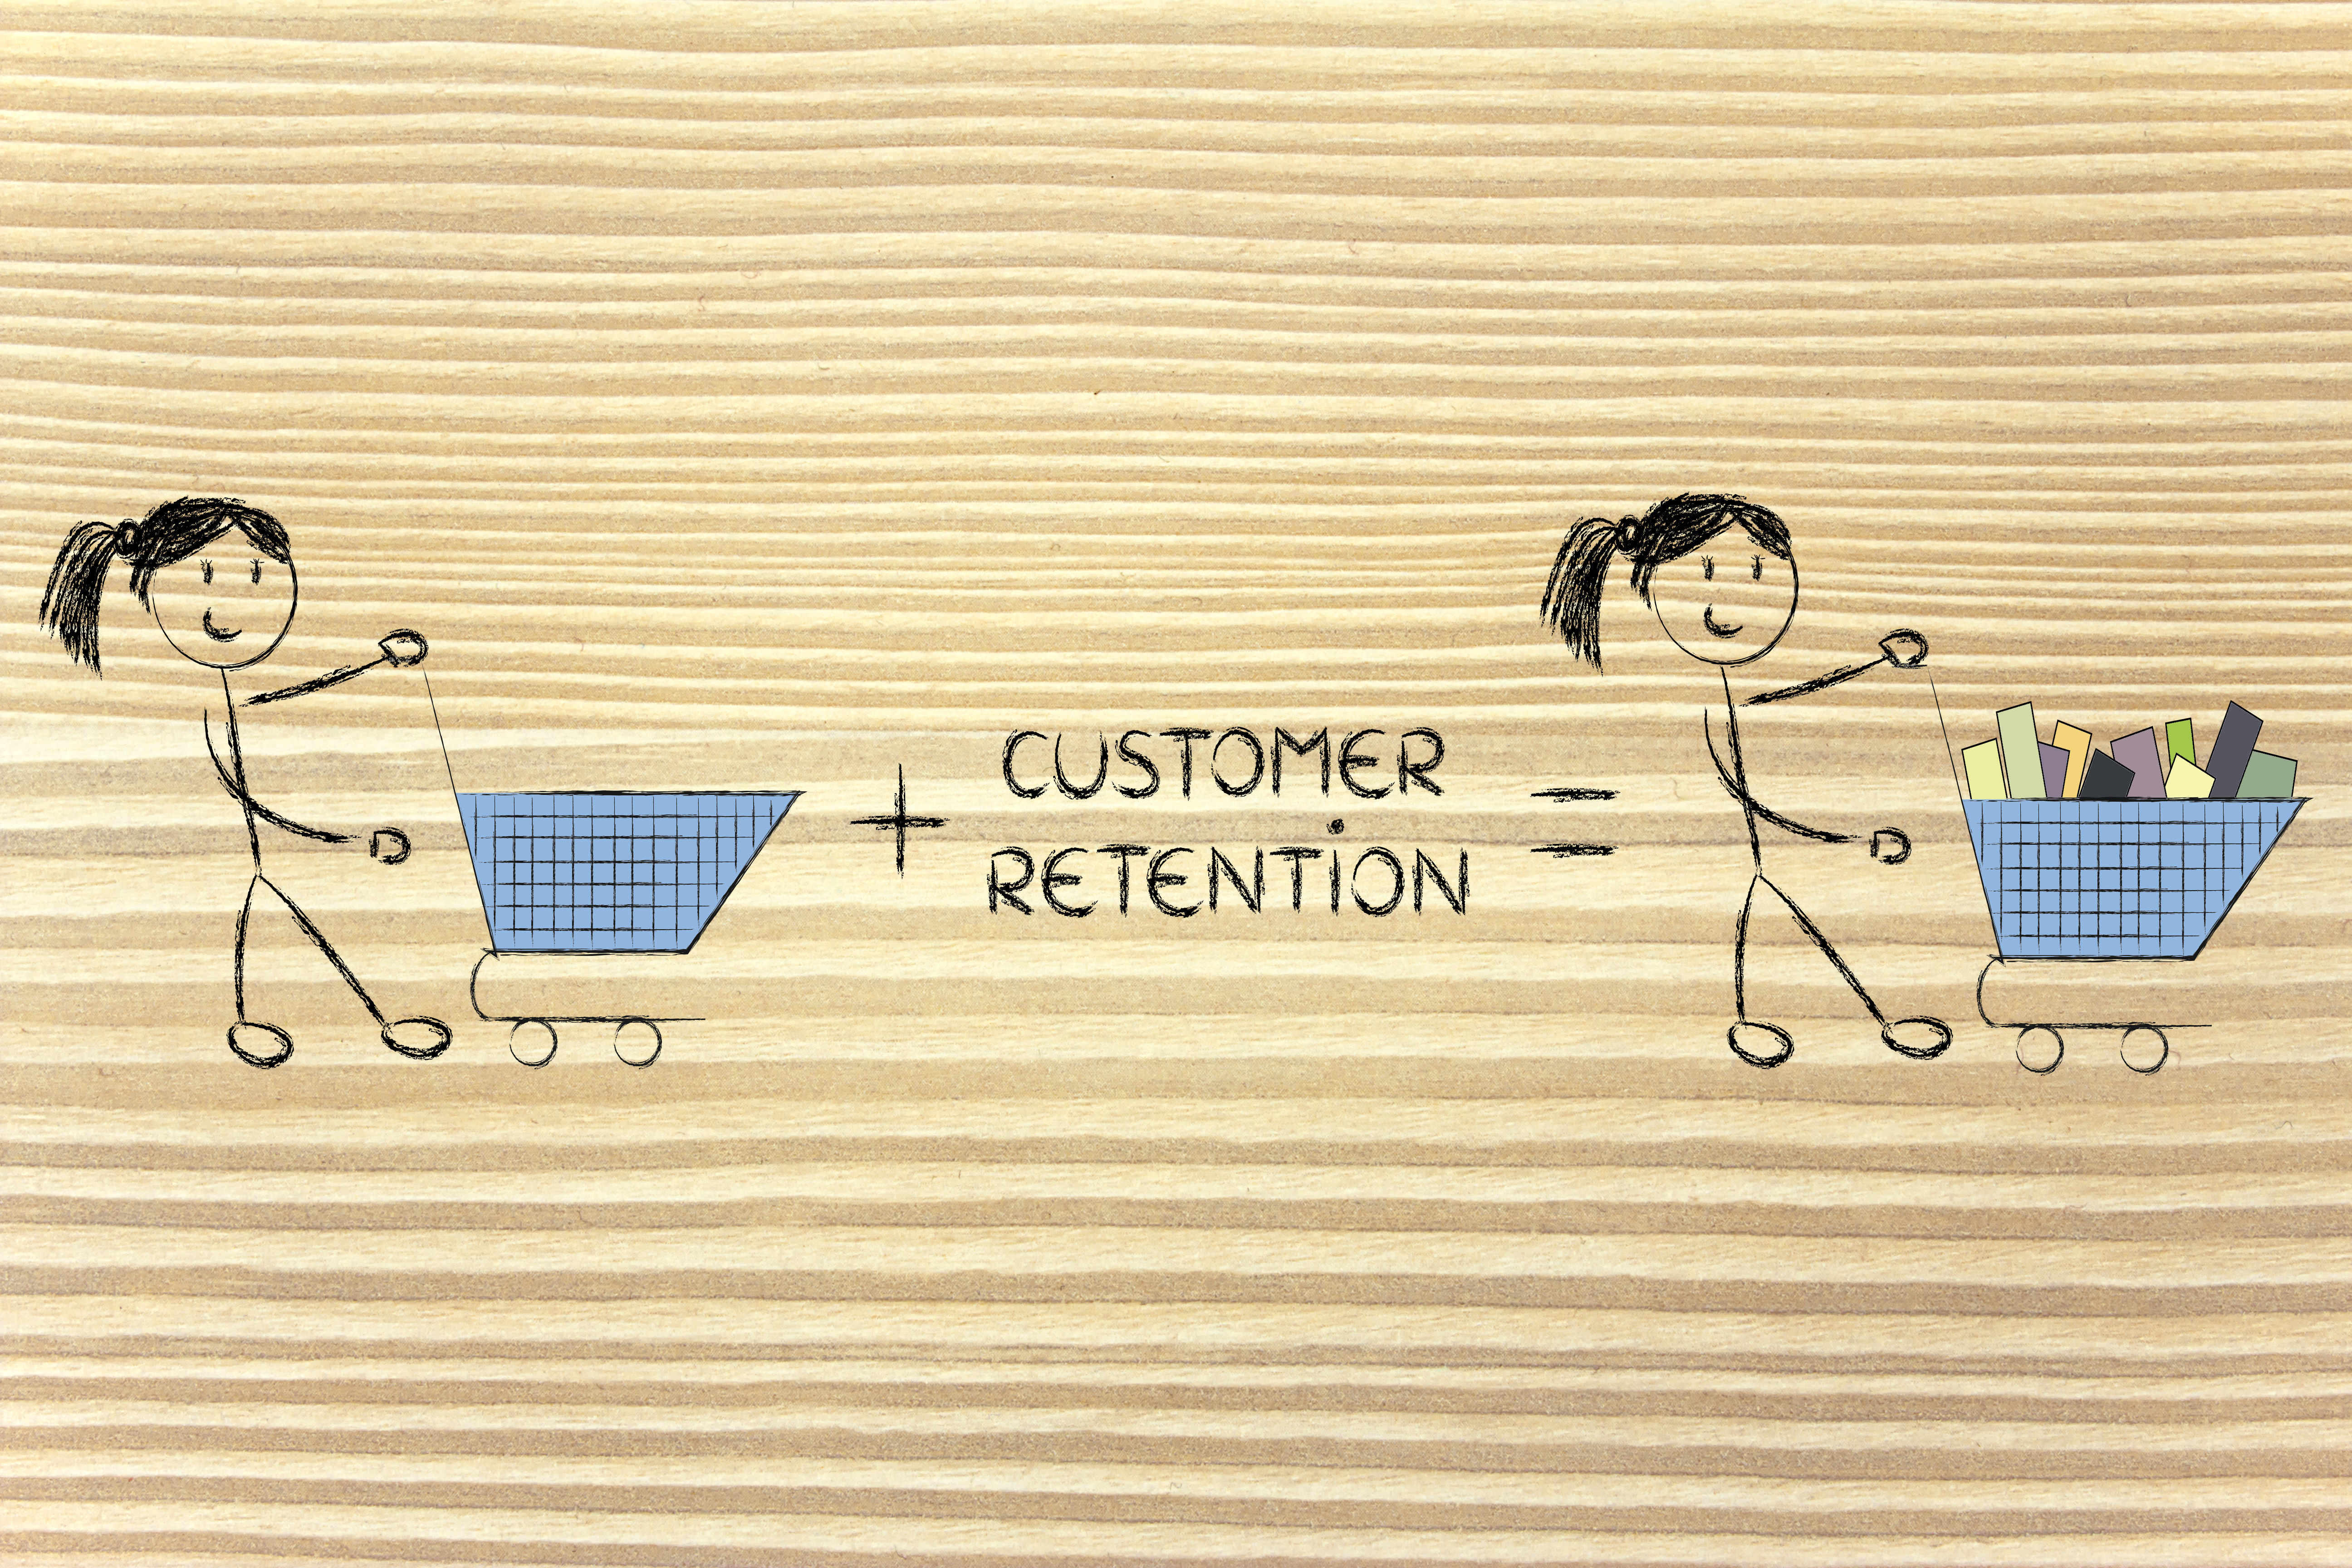 5 Ways to Reward and Retain Customers